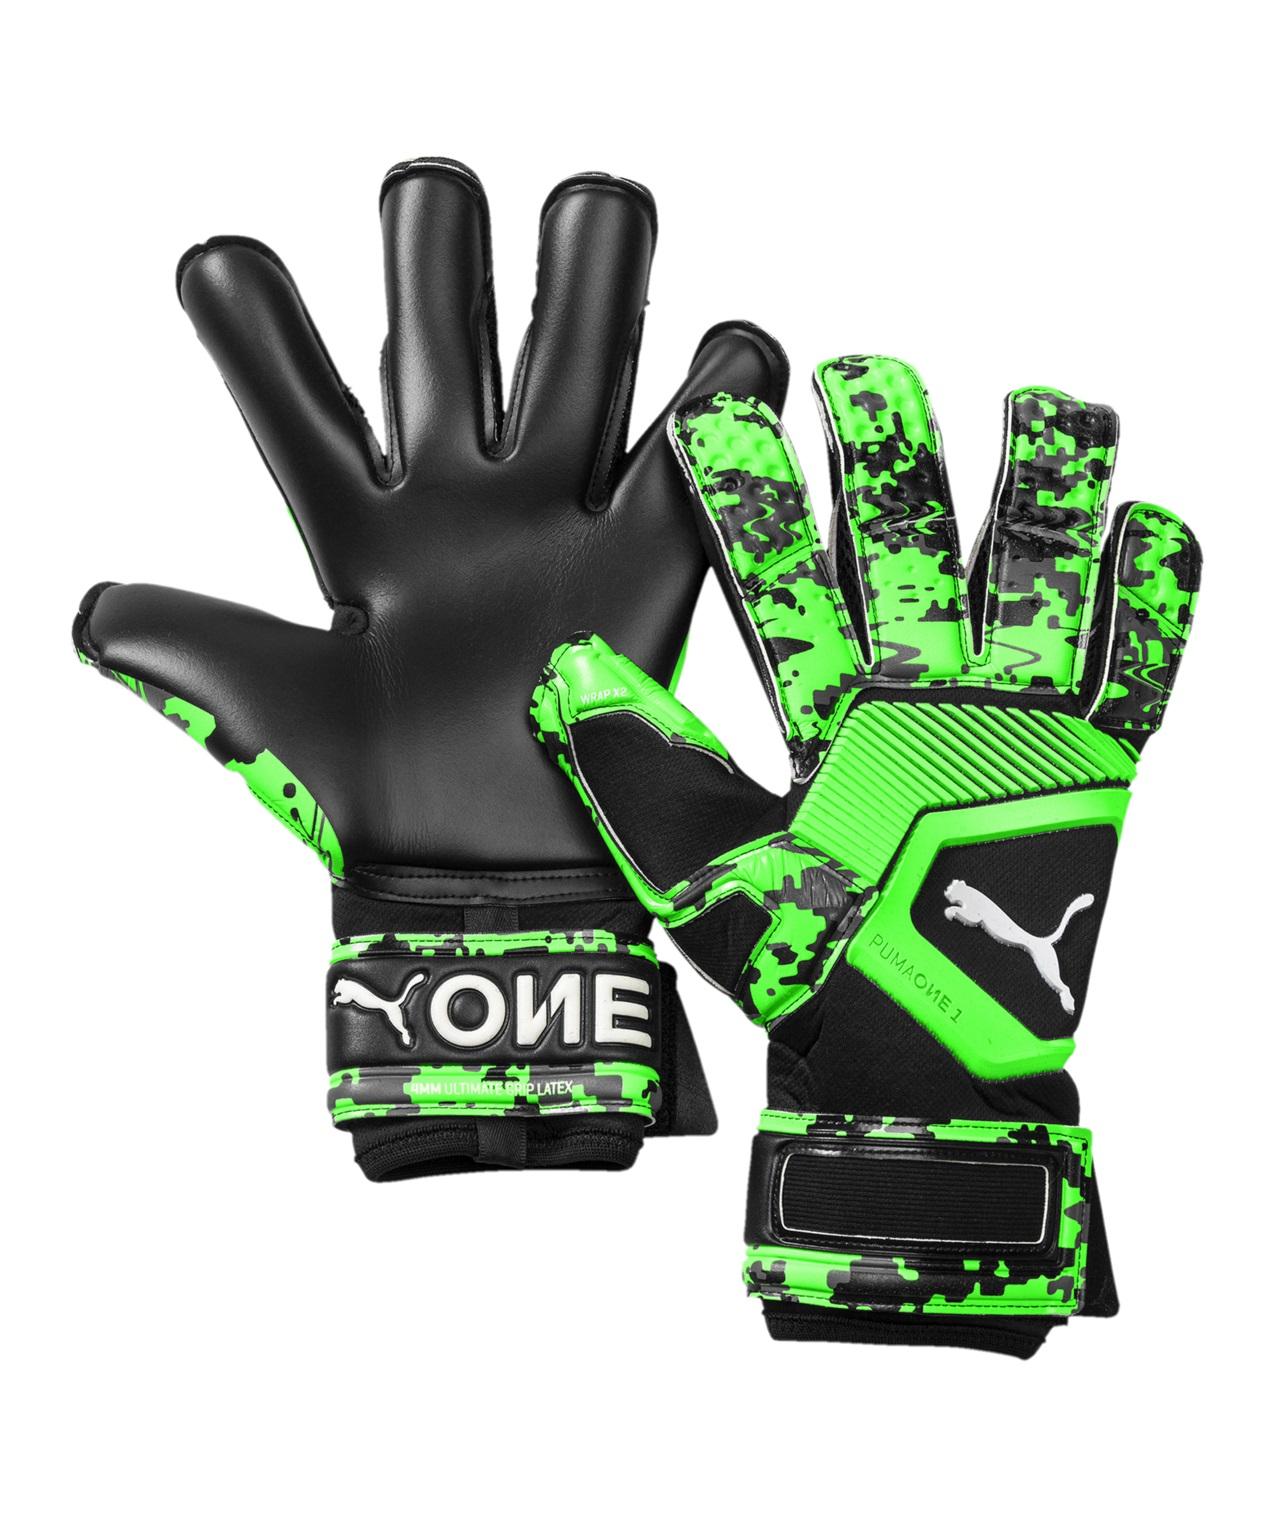  Puma One Grip 1 Hybrid Pro Goalkeeper Glove